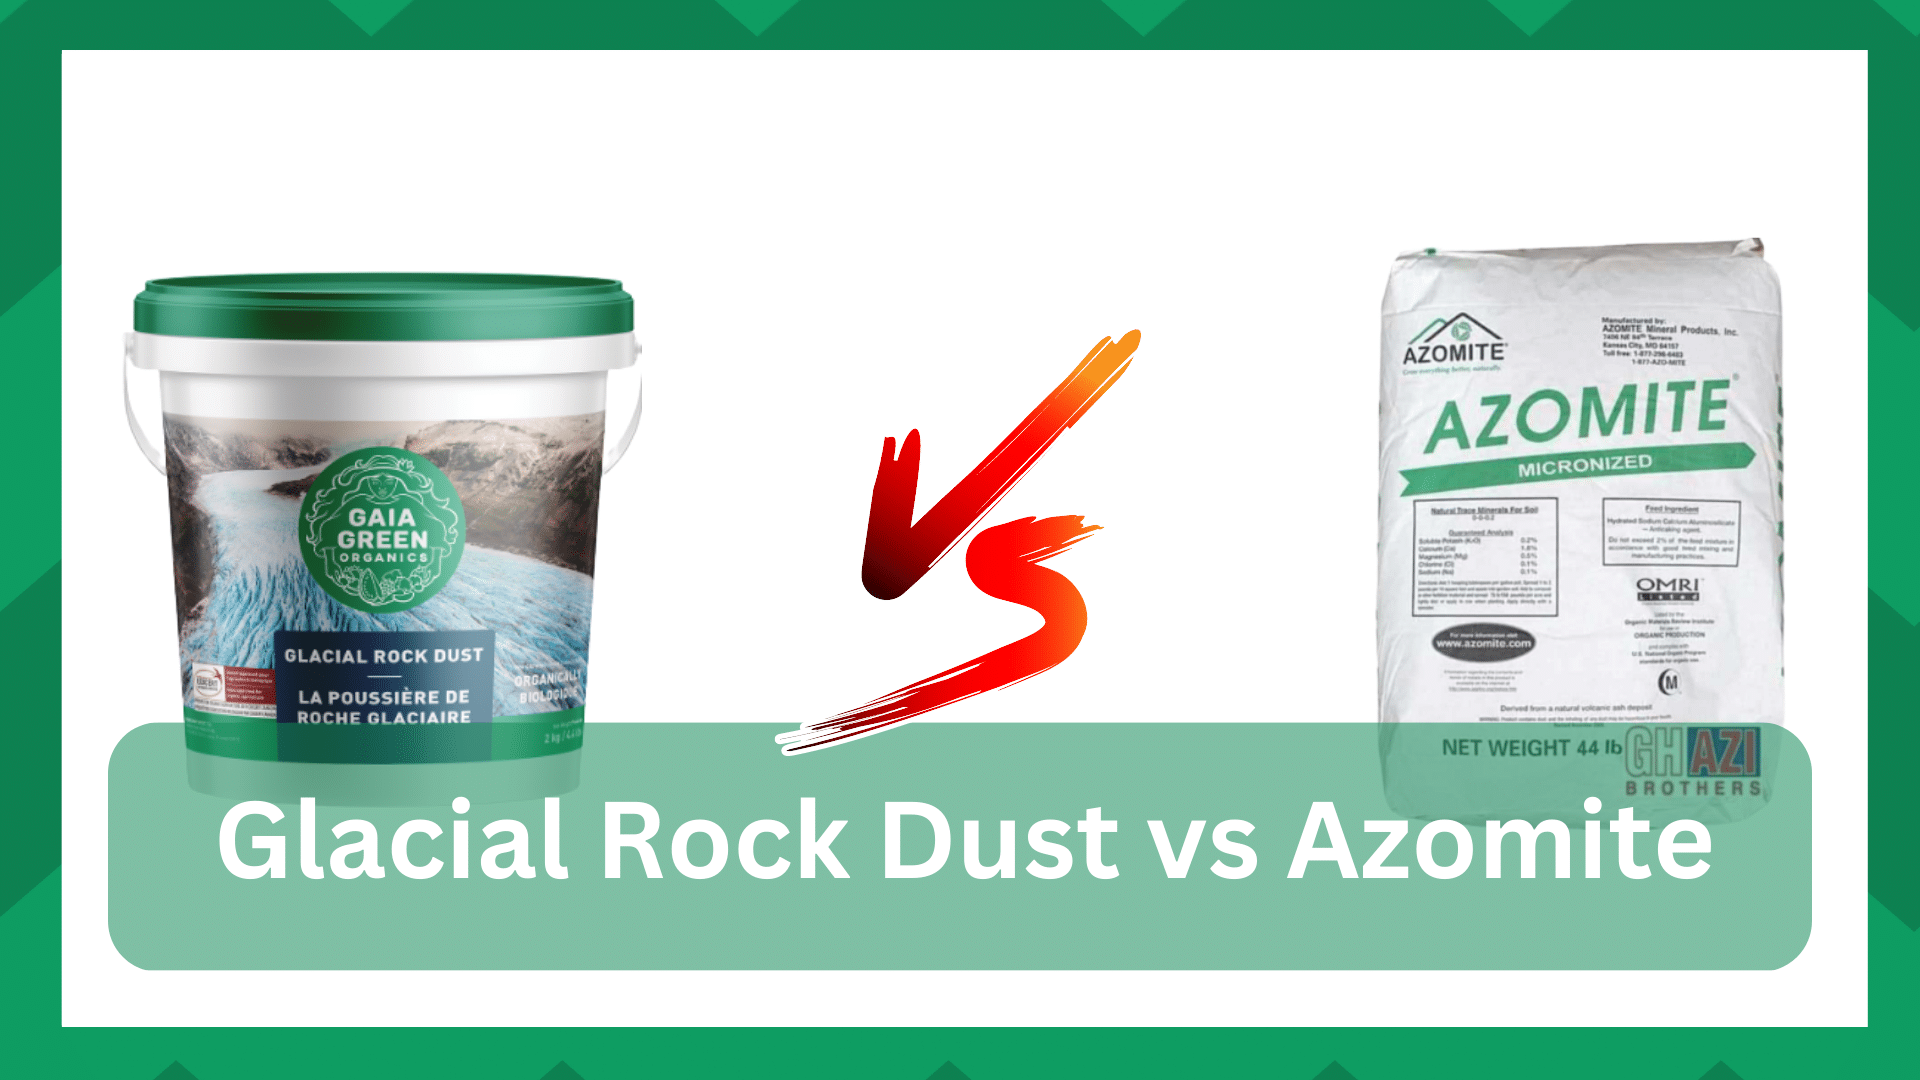 glacial rock dust vs azomite